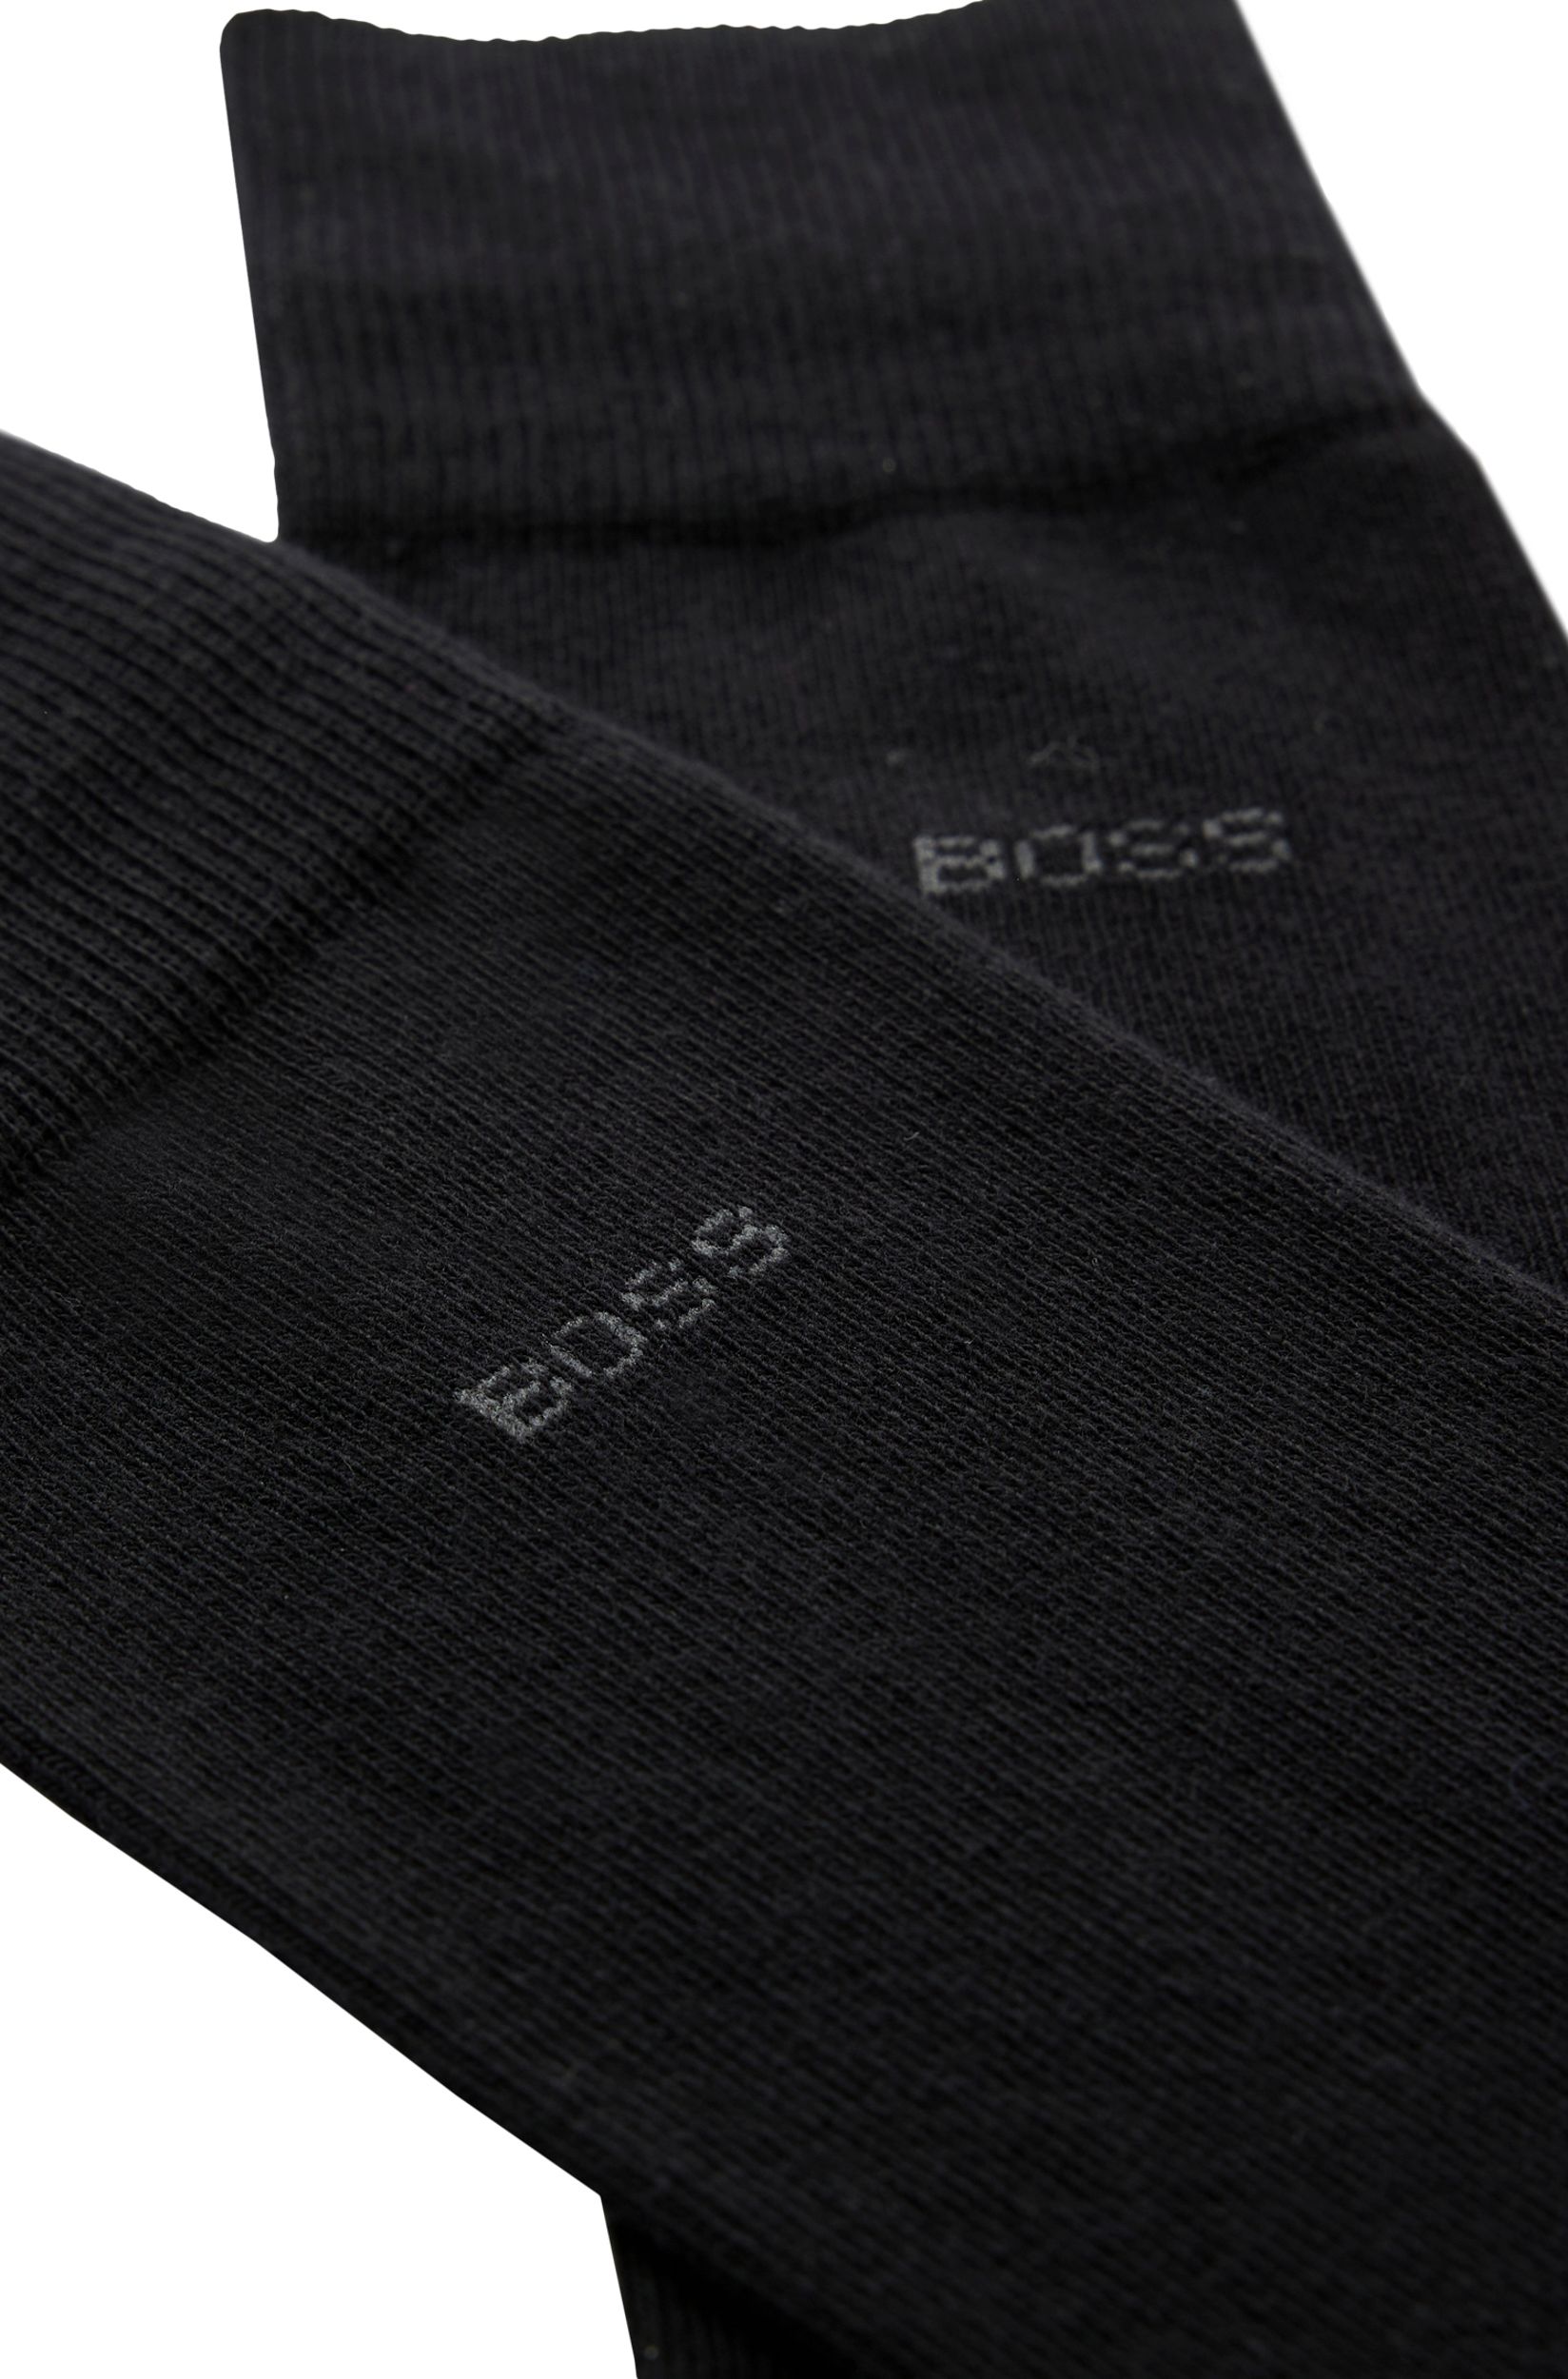 Hugo Boss Menswear Sokken Zwart 082263-001-3942